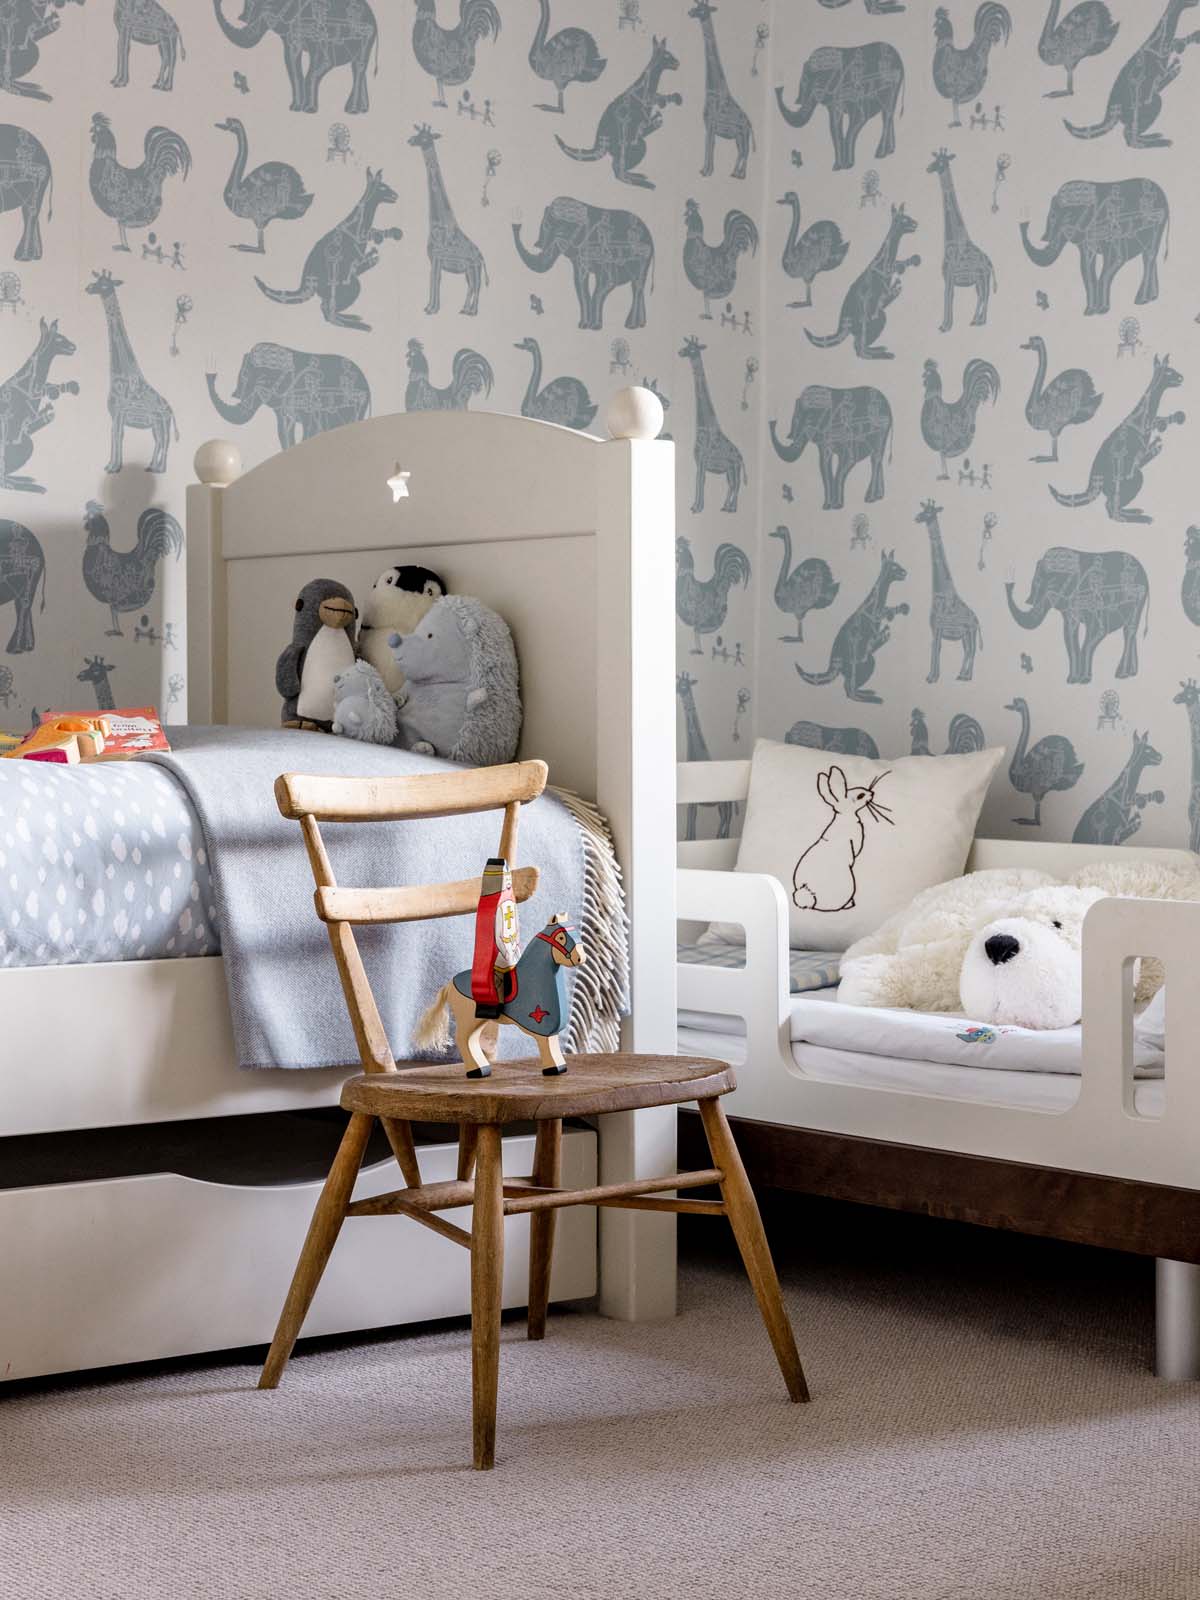 Children's bedroom with animal pattern wallpaper